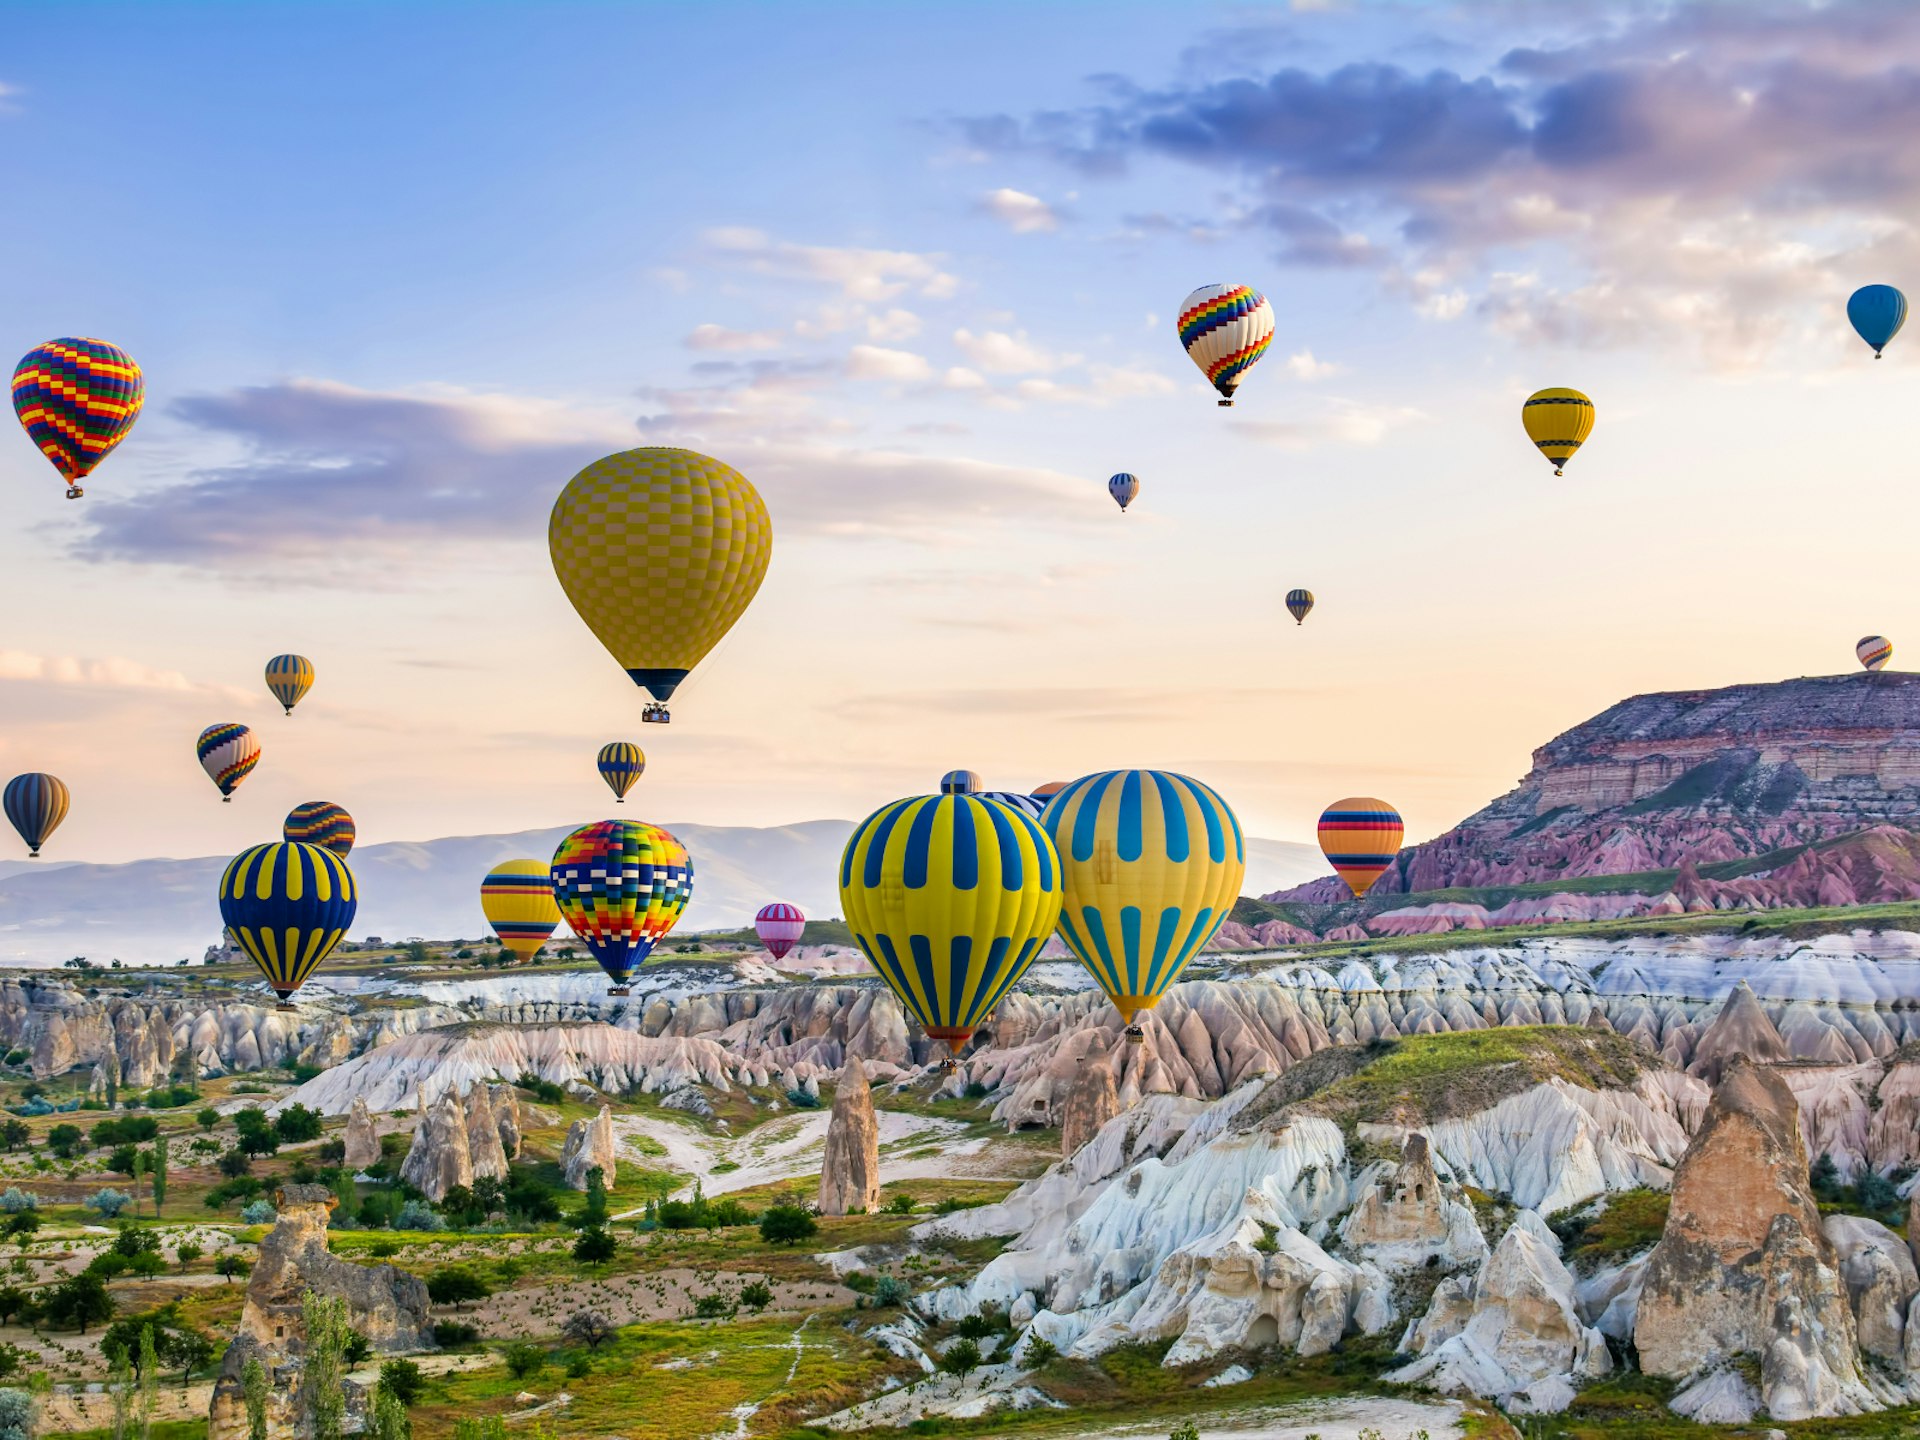 Hot-air balloons over the rocky landscape of Cappadocia, Turkey